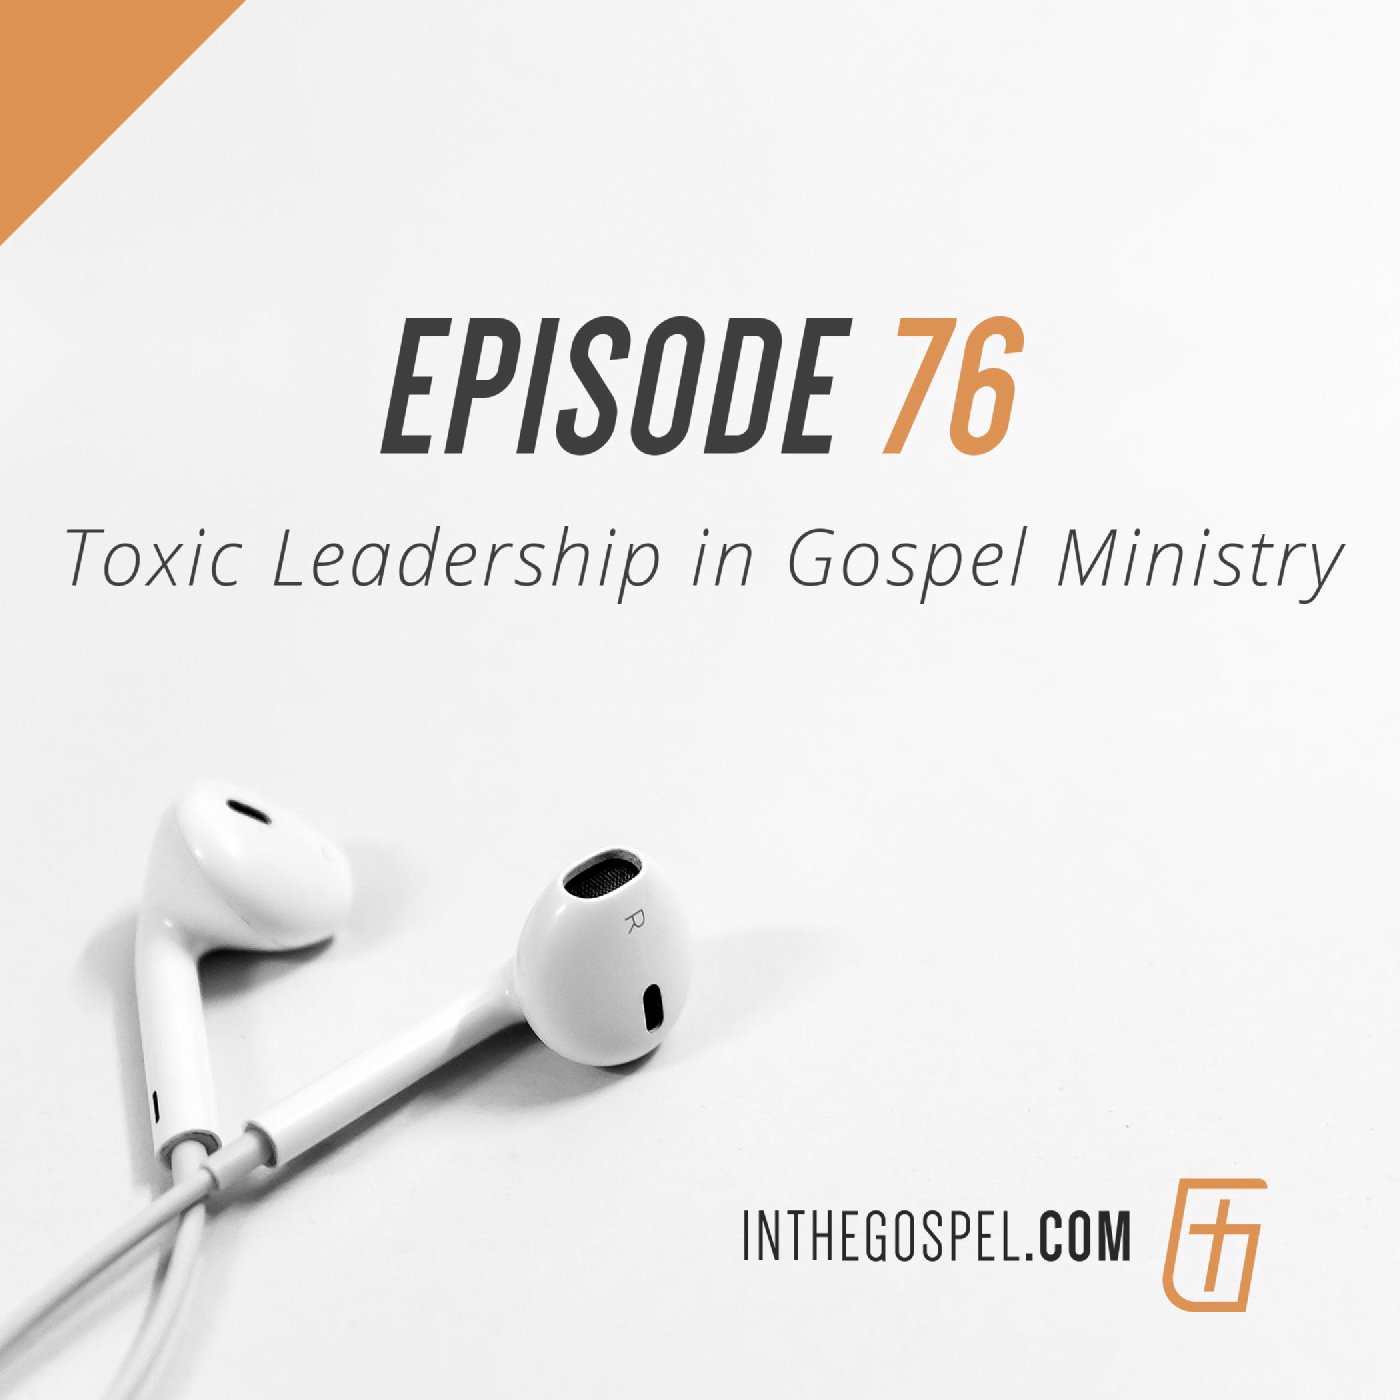 Episode 76: Toxic Leadership in Gospel Ministry